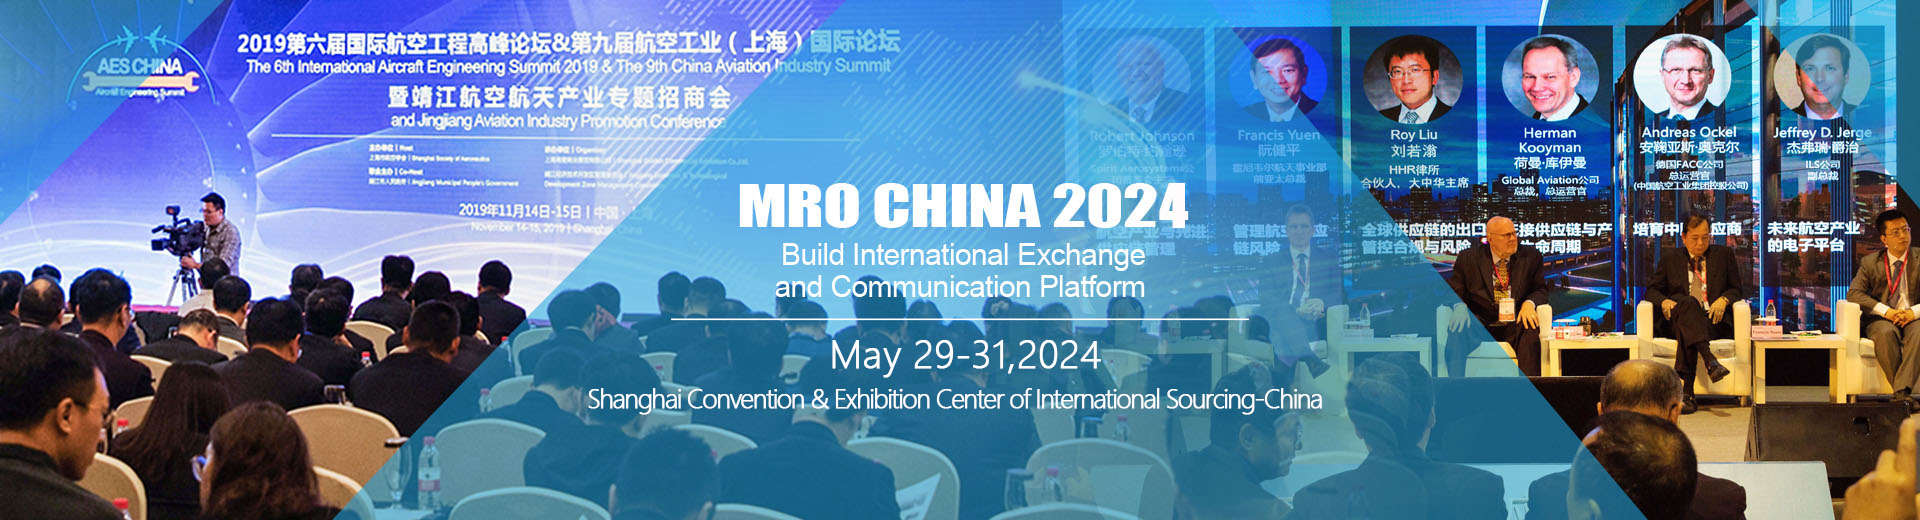 The 7th Shanghai International MRO Exhibition 2024